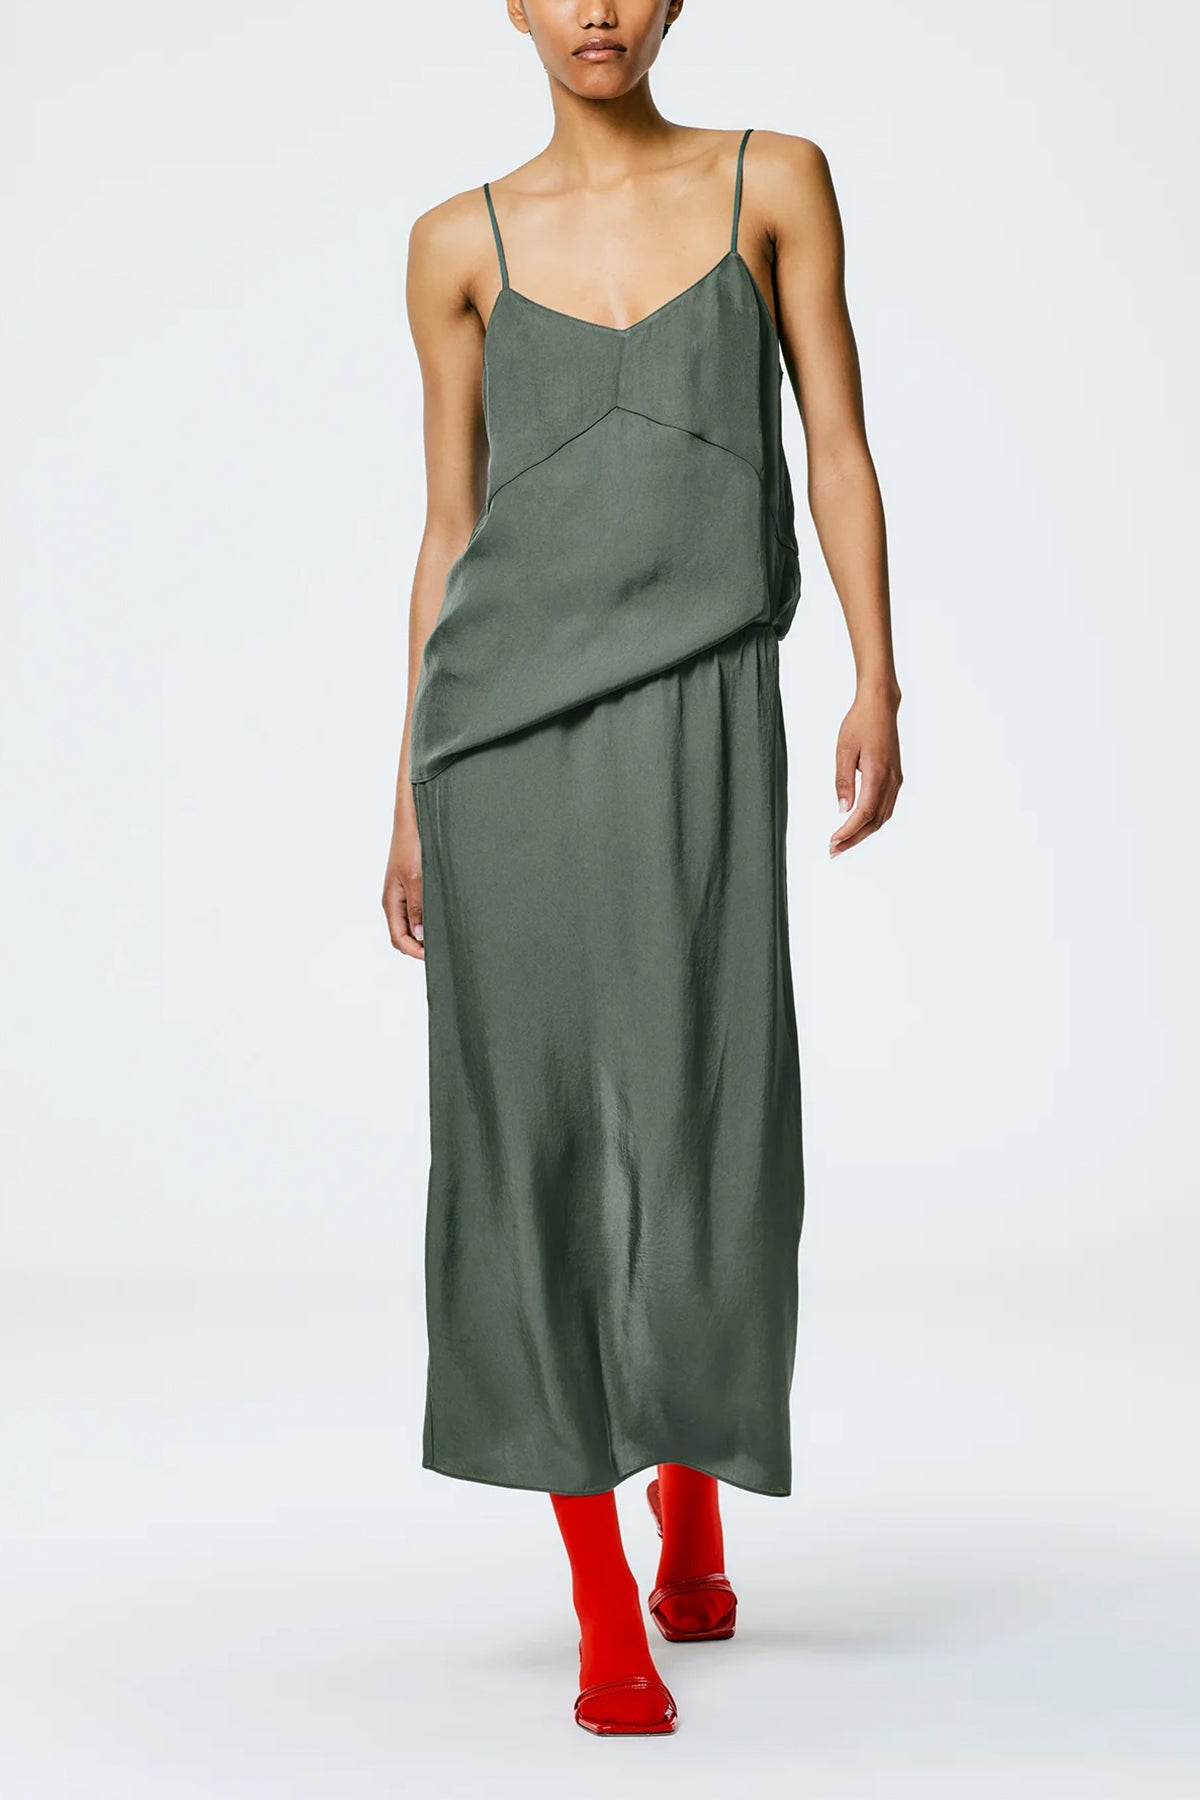 The Slip Skirt in Grey Pine - shop-olivia.com